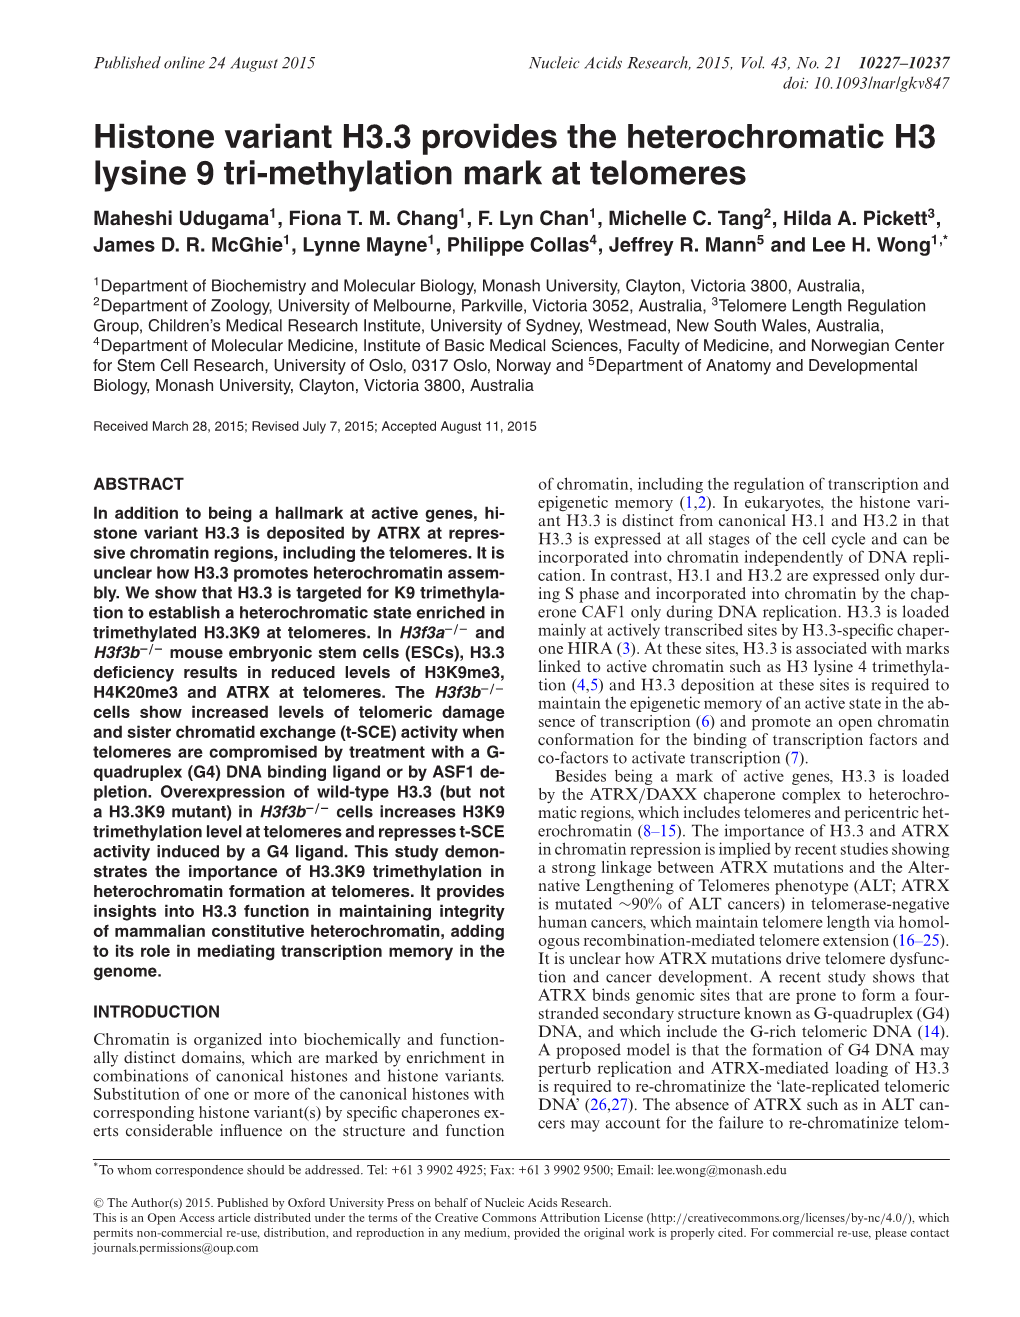 Histone Variant H3.3 Provides the Heterochromatic H3 Lysine 9 Tri-Methylation Mark at Telomeres Maheshi Udugama1, Fiona T